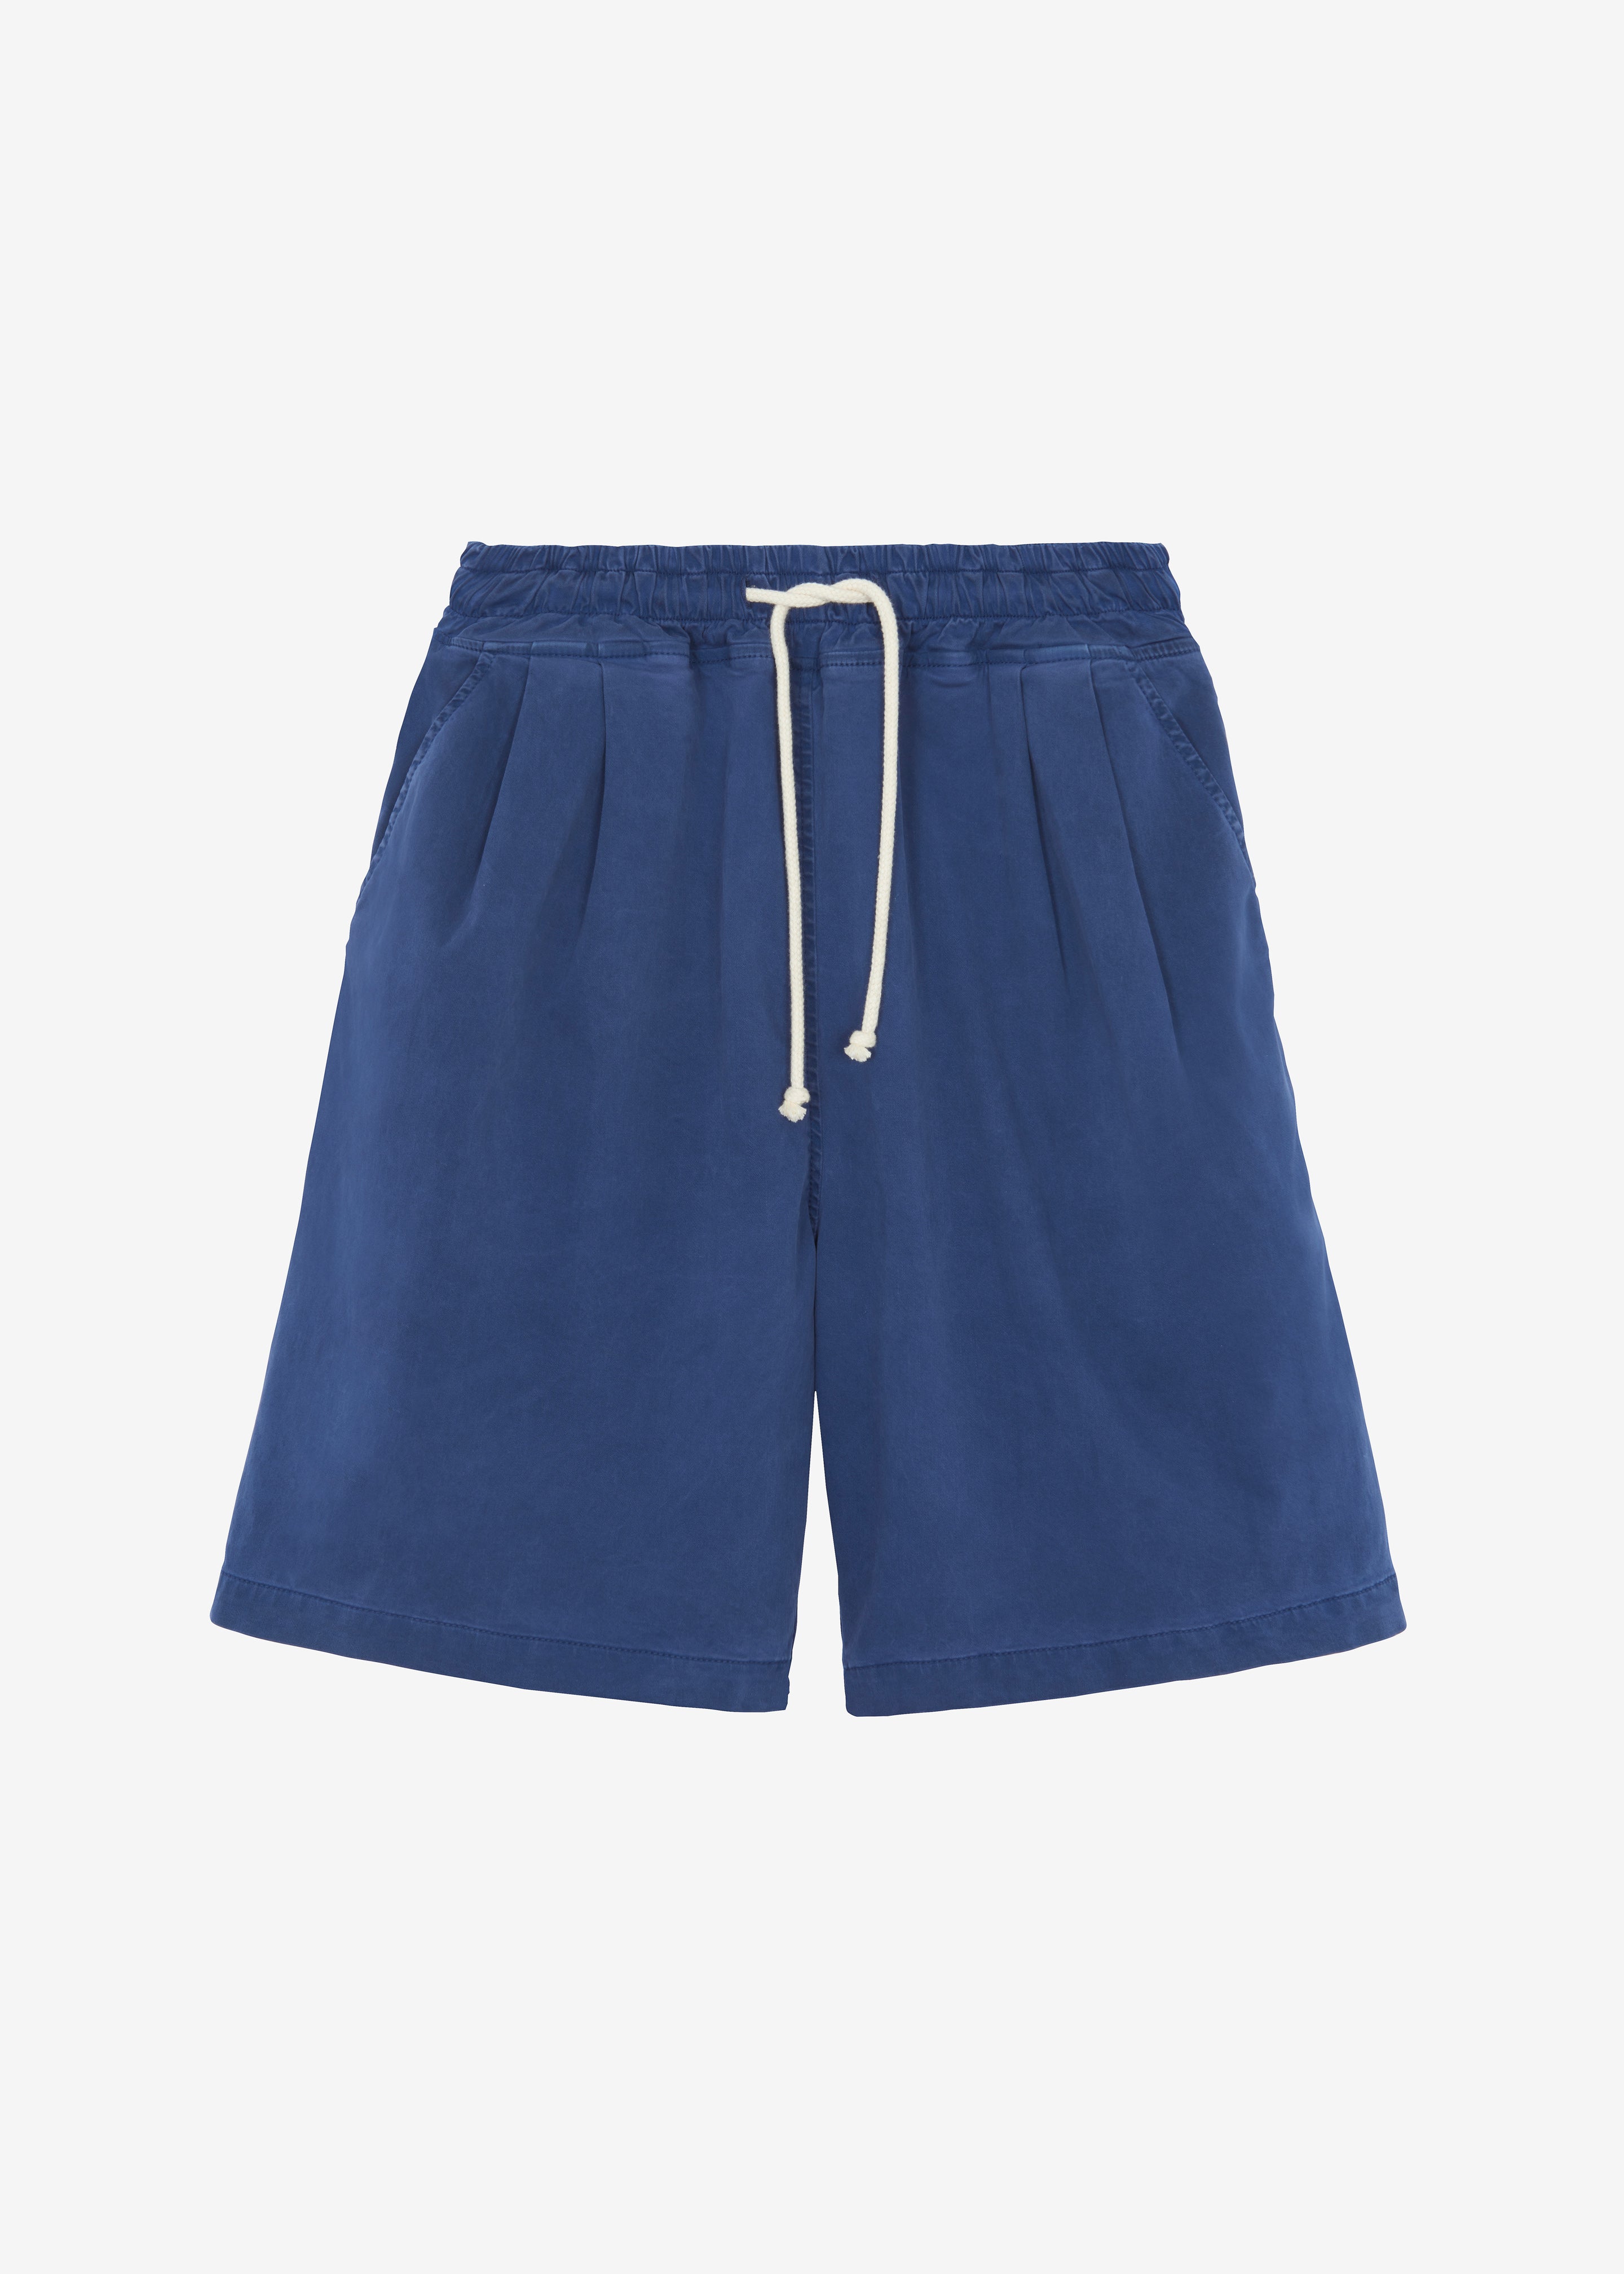 Pierce Shorts - Blue - 8